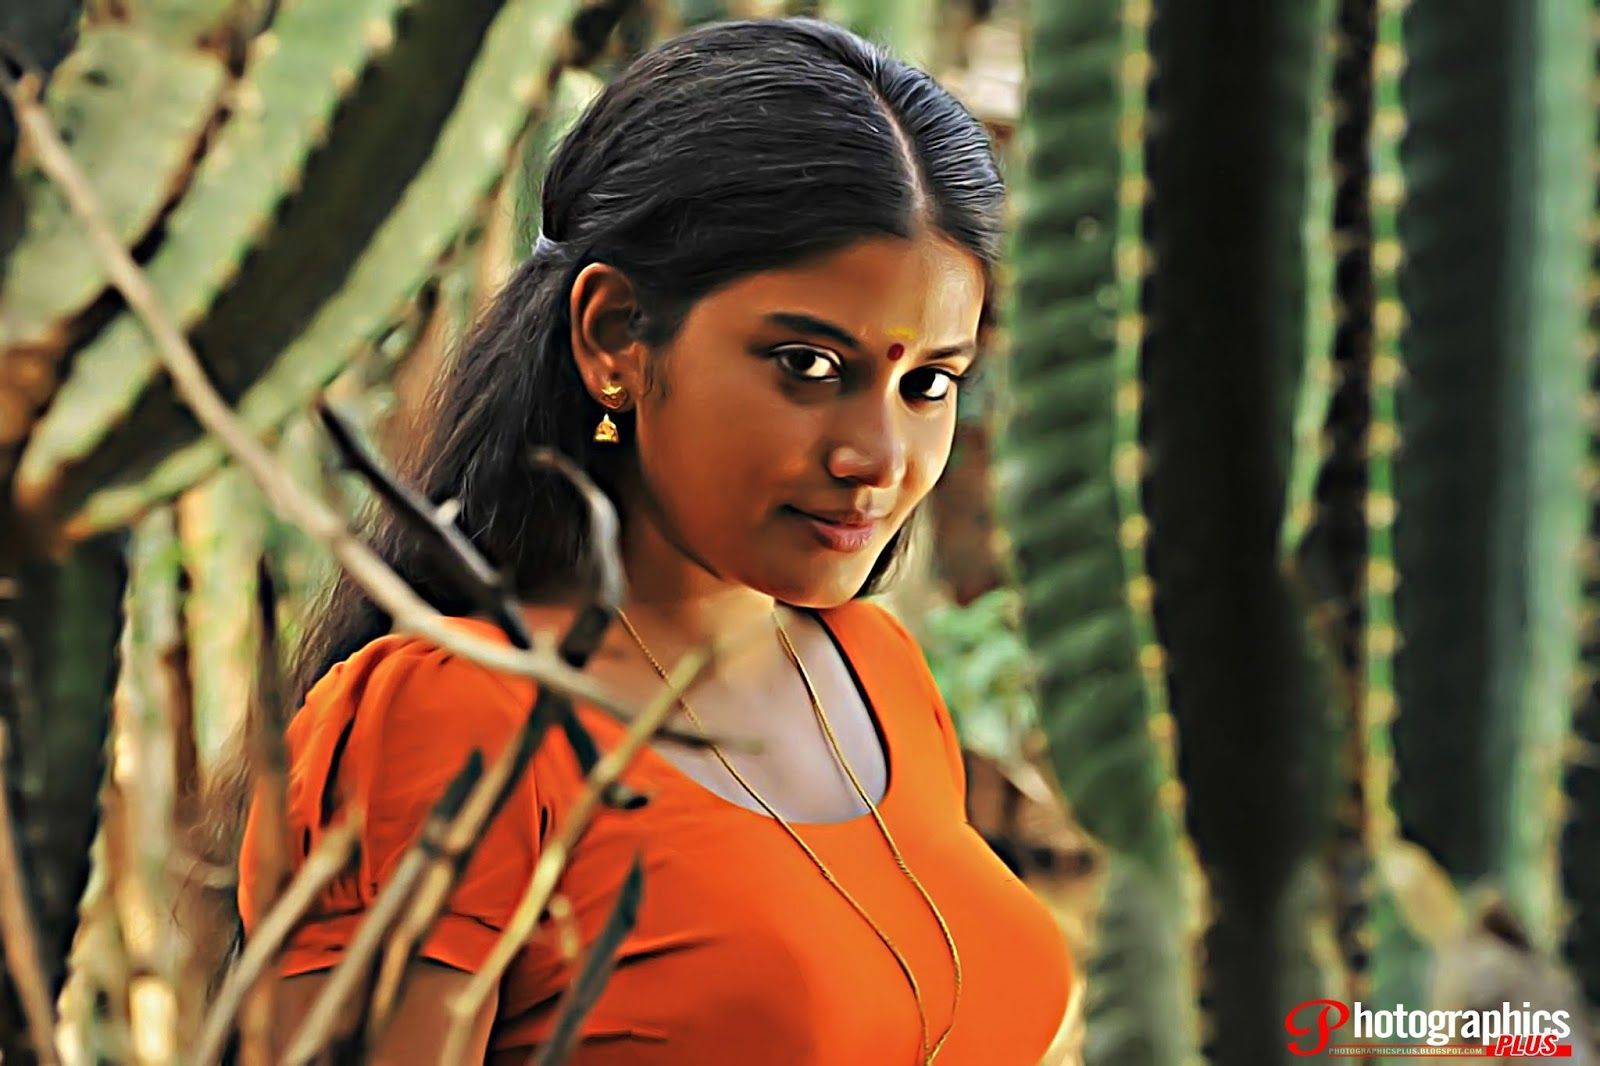 BEST DIGITAL ART MALAYALAM VILLAGE GIRL IN BLOUSE CLOSEUP VIEW EXCLUSIVE WALLPAPER. PHOTOGRAPHICS PLUS. Village girl, Tamil actress photo, Tamil actress